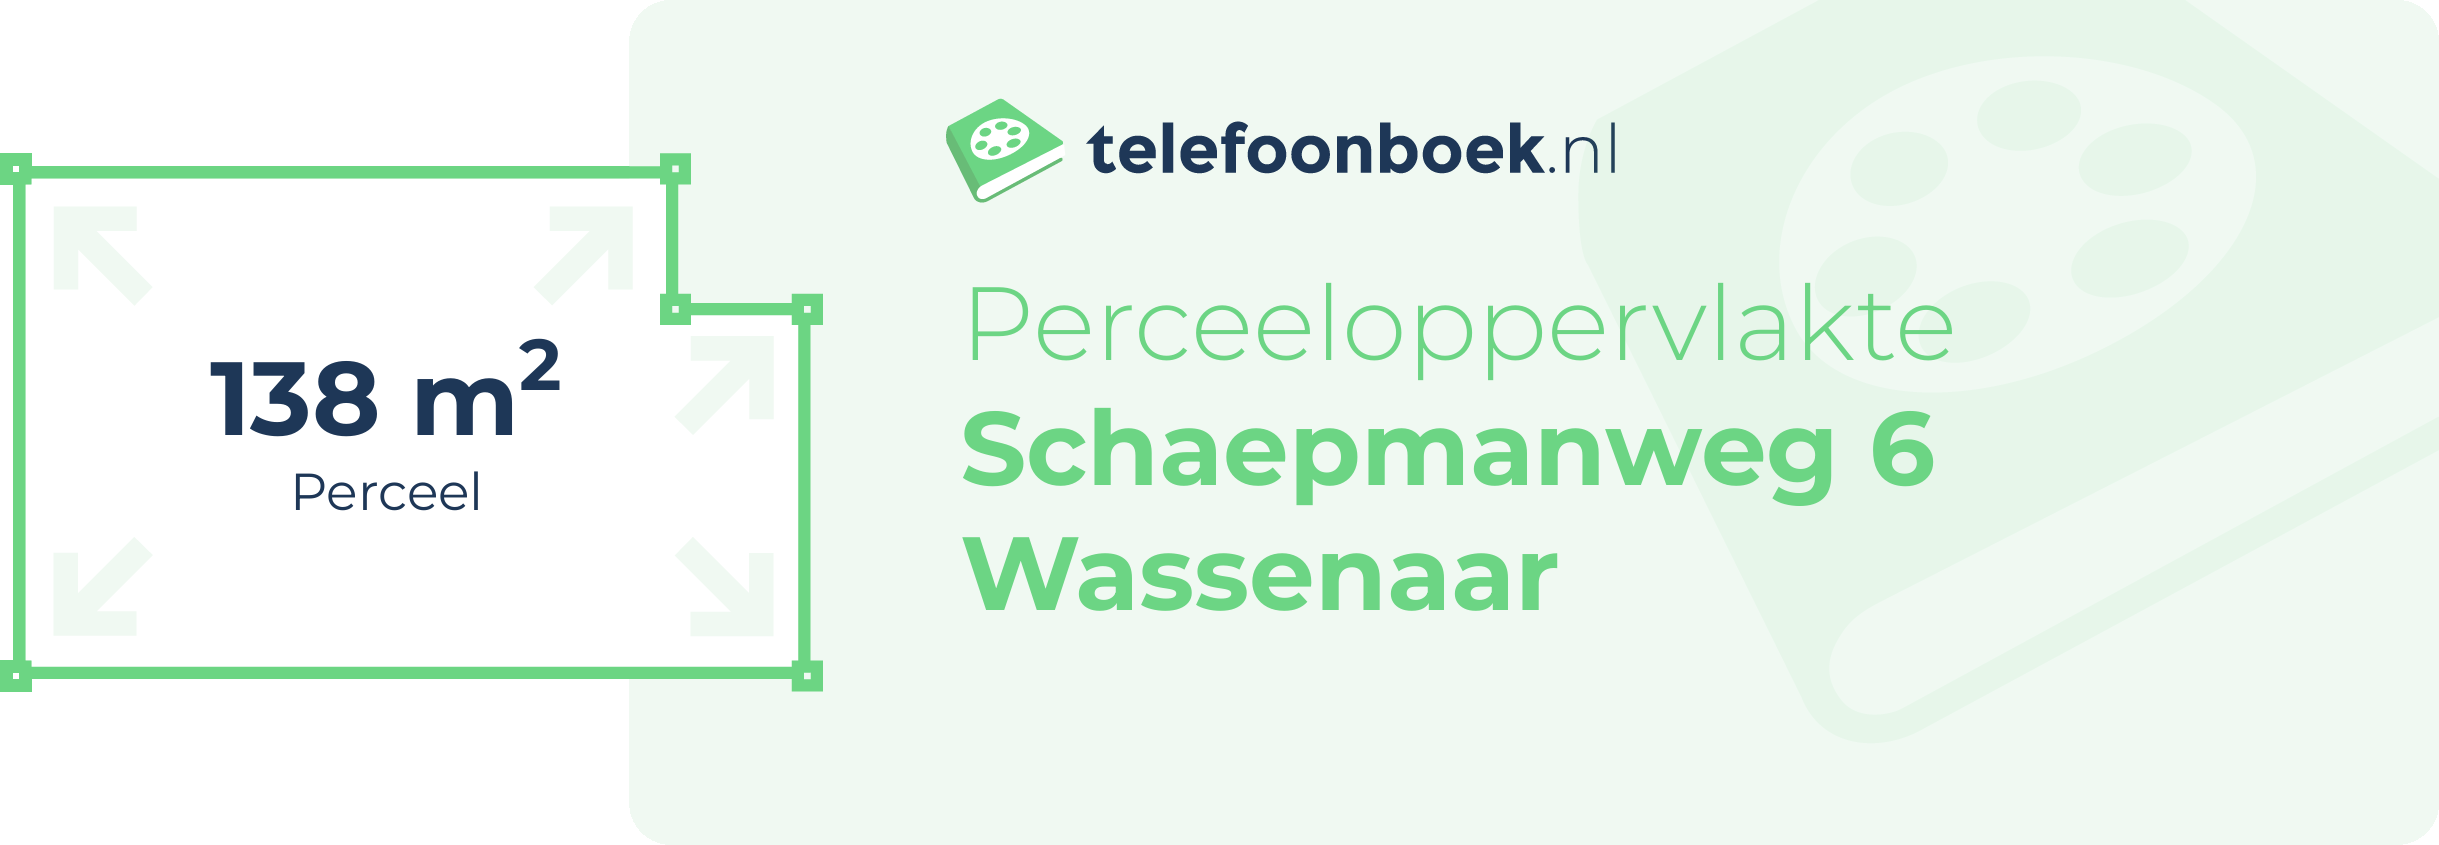 Perceeloppervlakte Schaepmanweg 6 Wassenaar